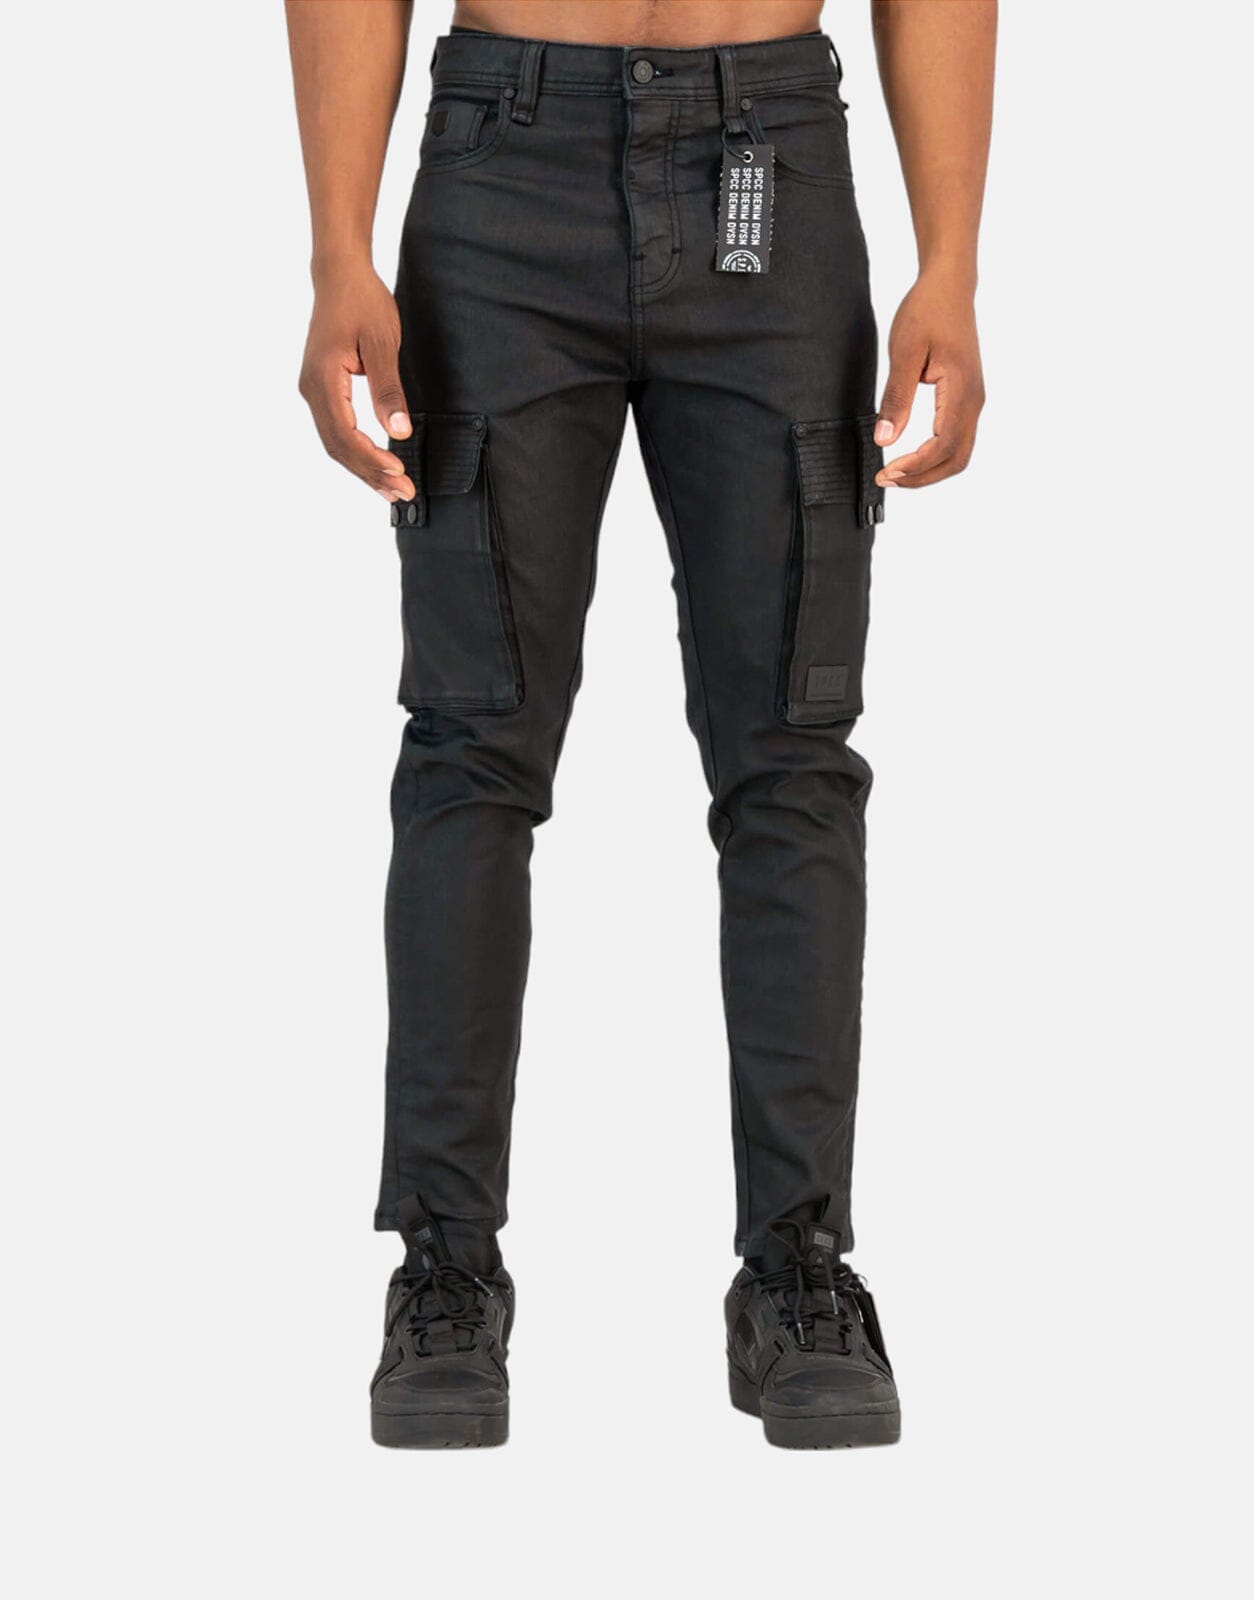 SPCC Tanaka Black Jeans - Subwear